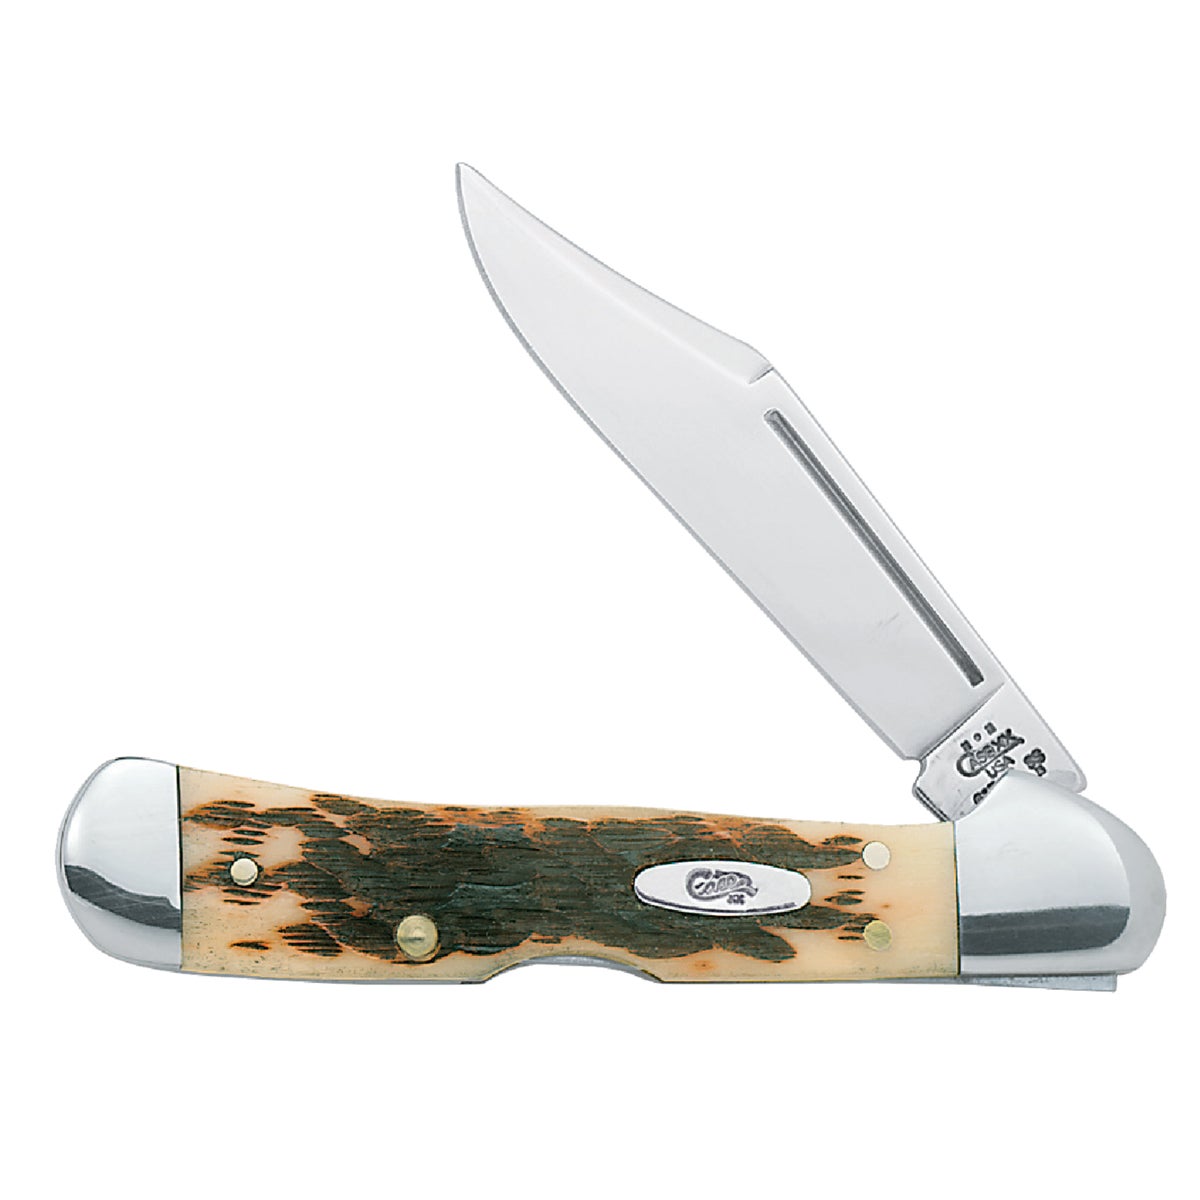 Item 826189, Mini Copperlock folding knife featuring a surgical steel blade.